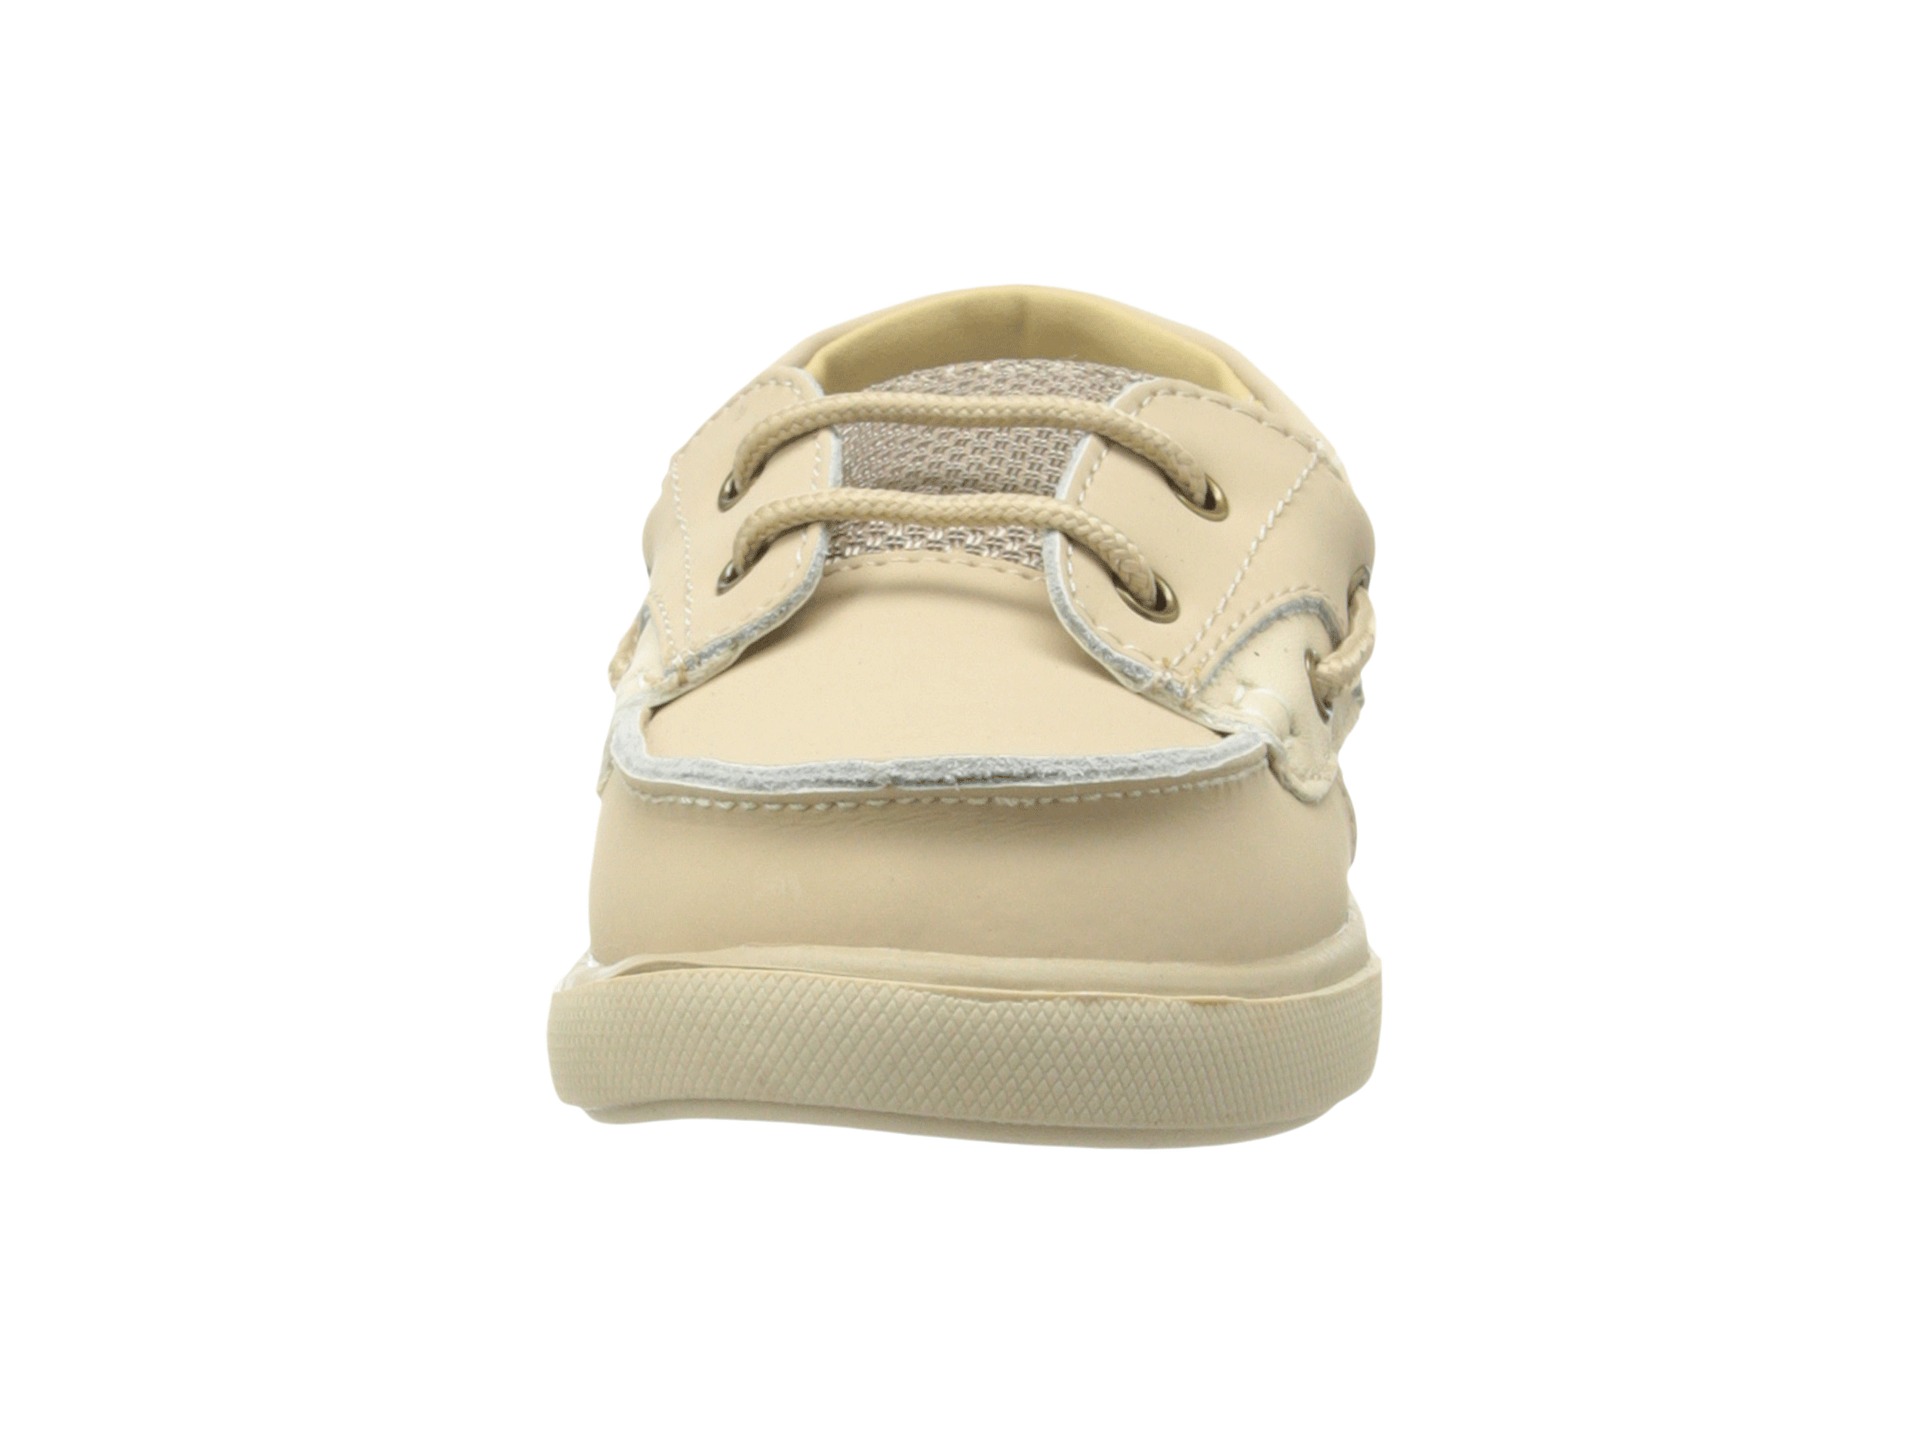 Baby Deer Deck Shoe Infant Toddler Tan Nubuck | Shipped Free at Zappos